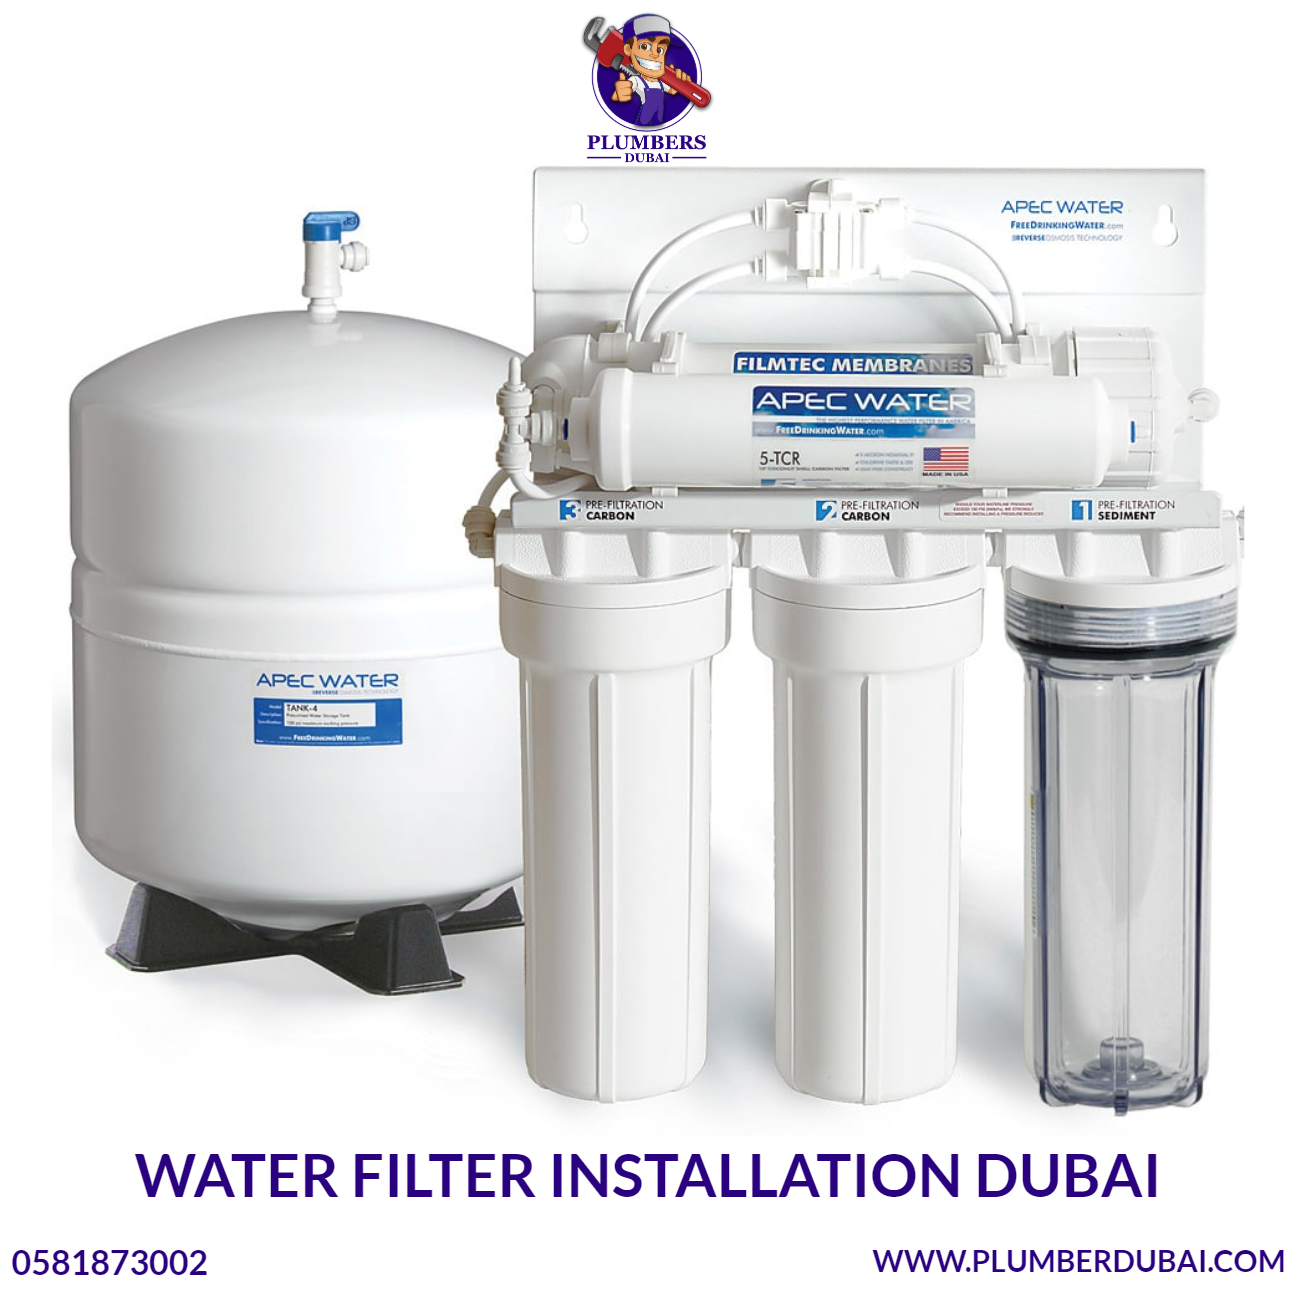 Water Filter installation Dubai